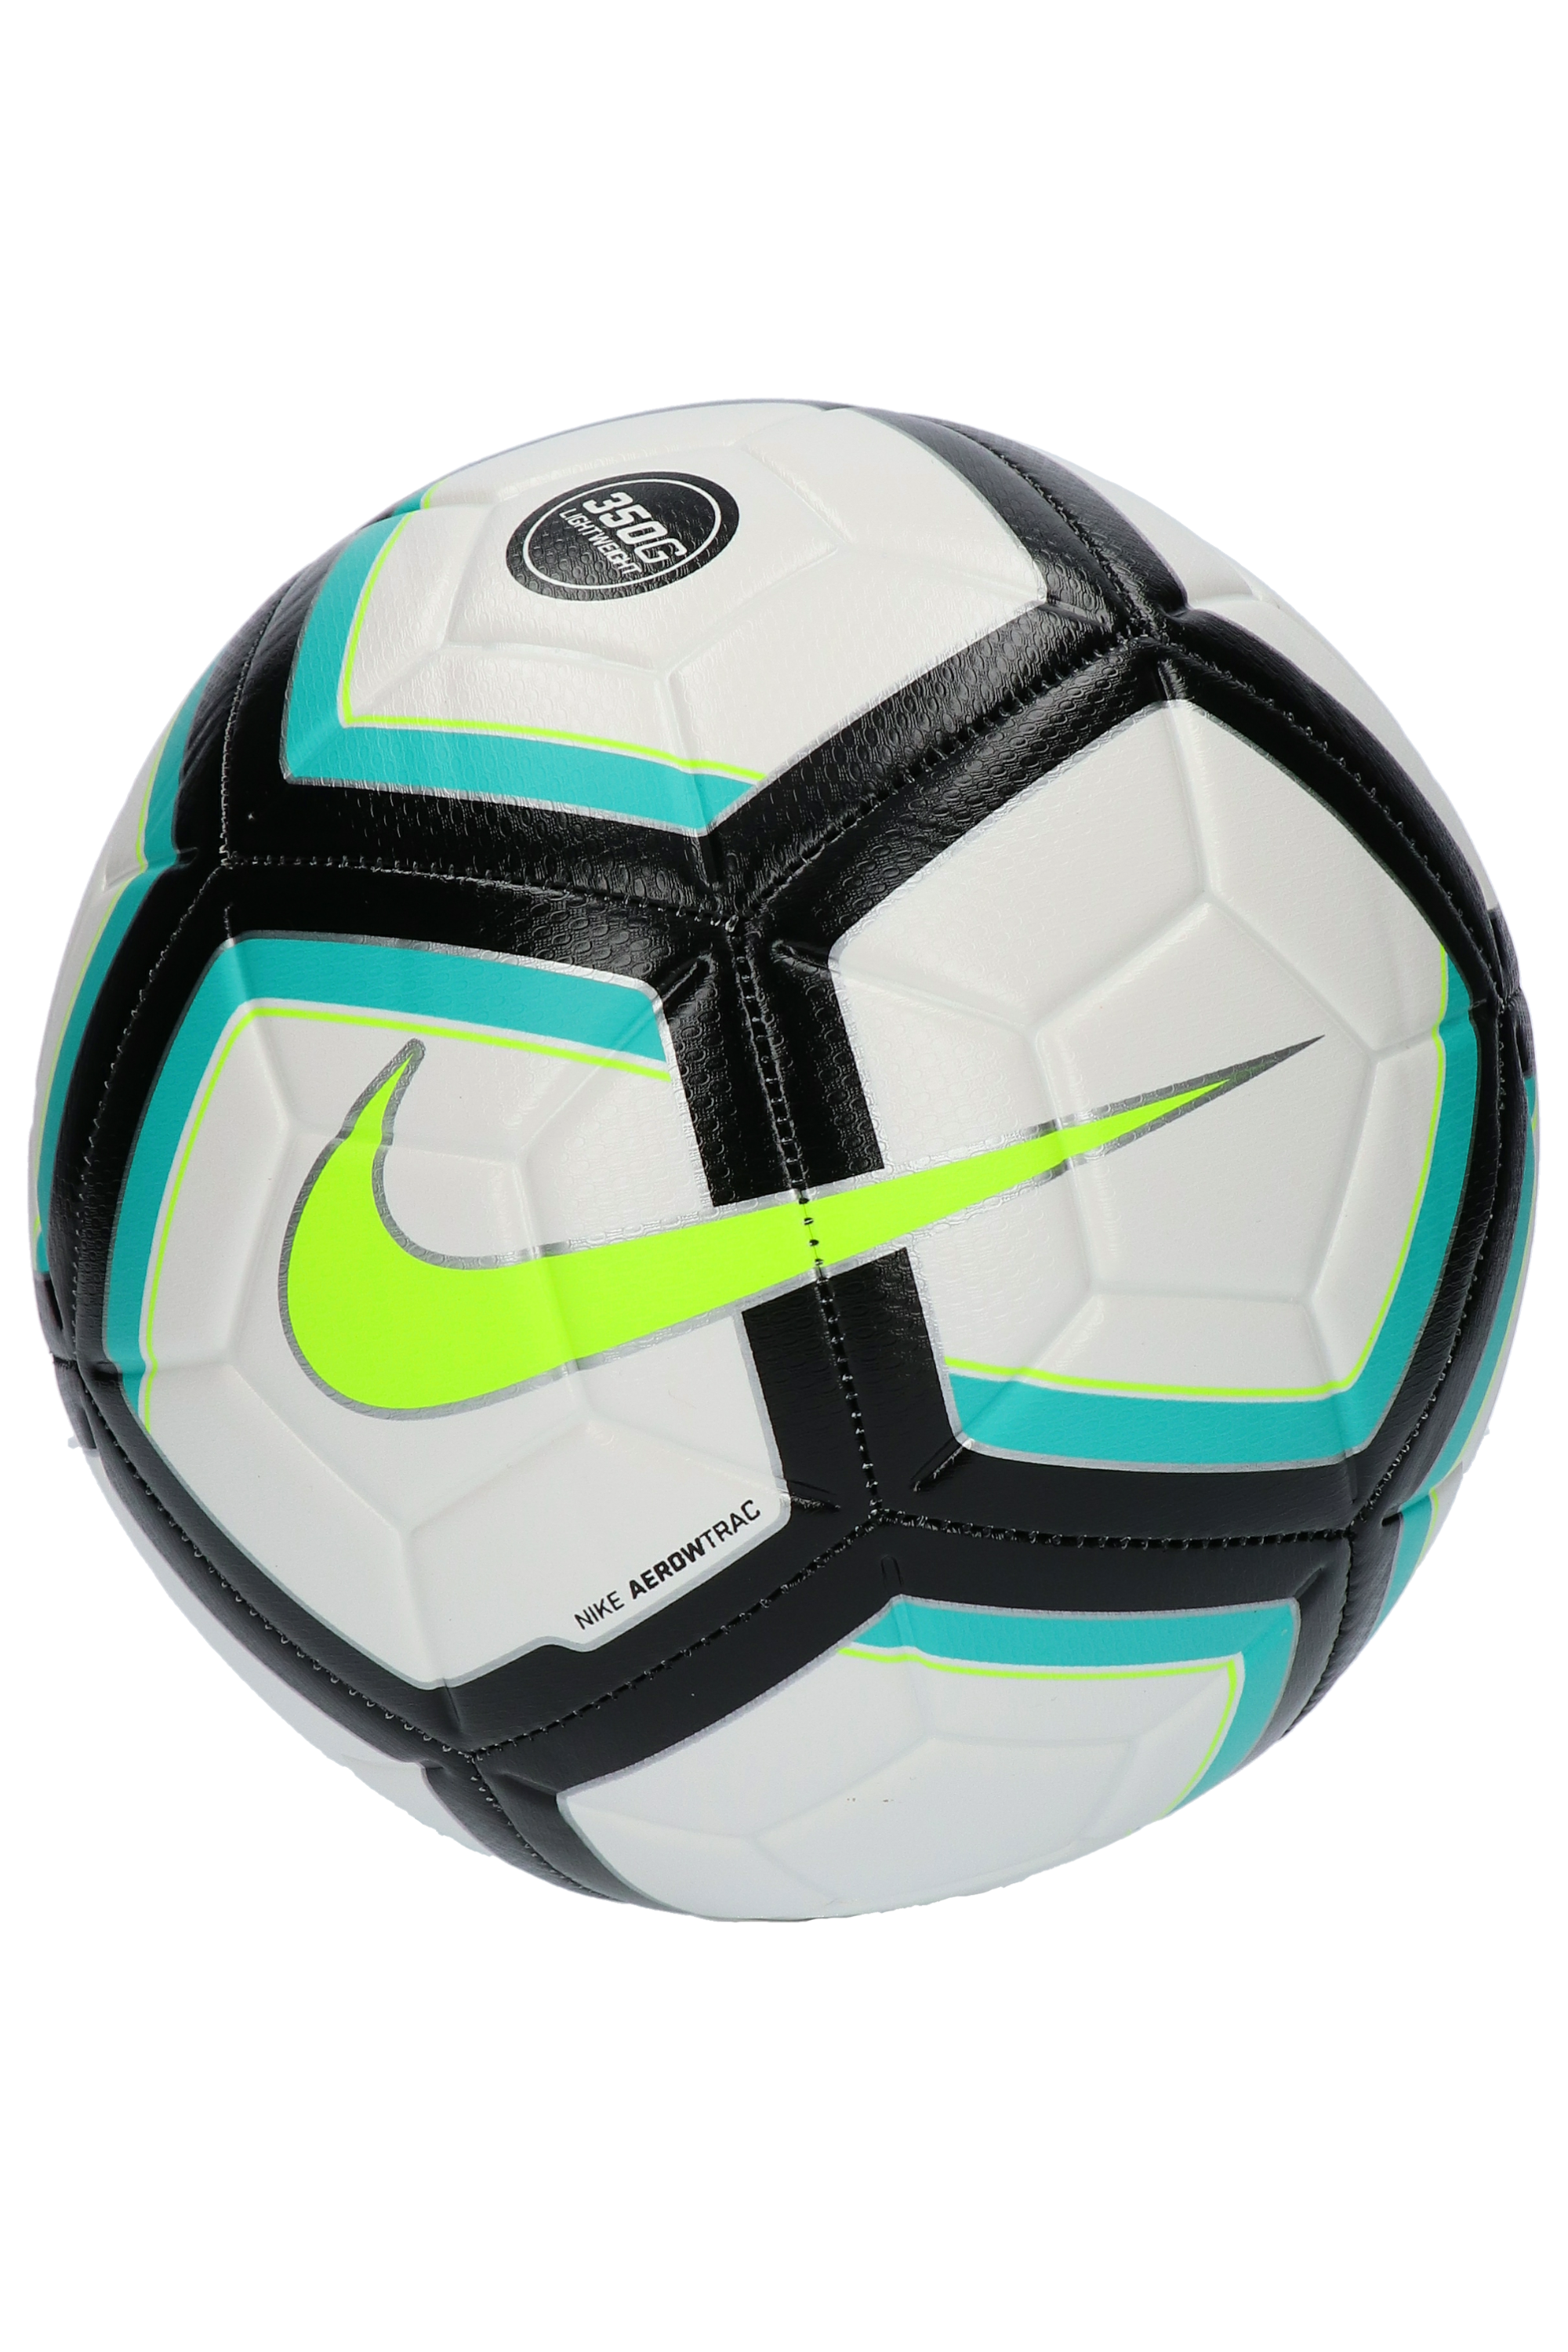 nike aerowtrac soccer ball size 5